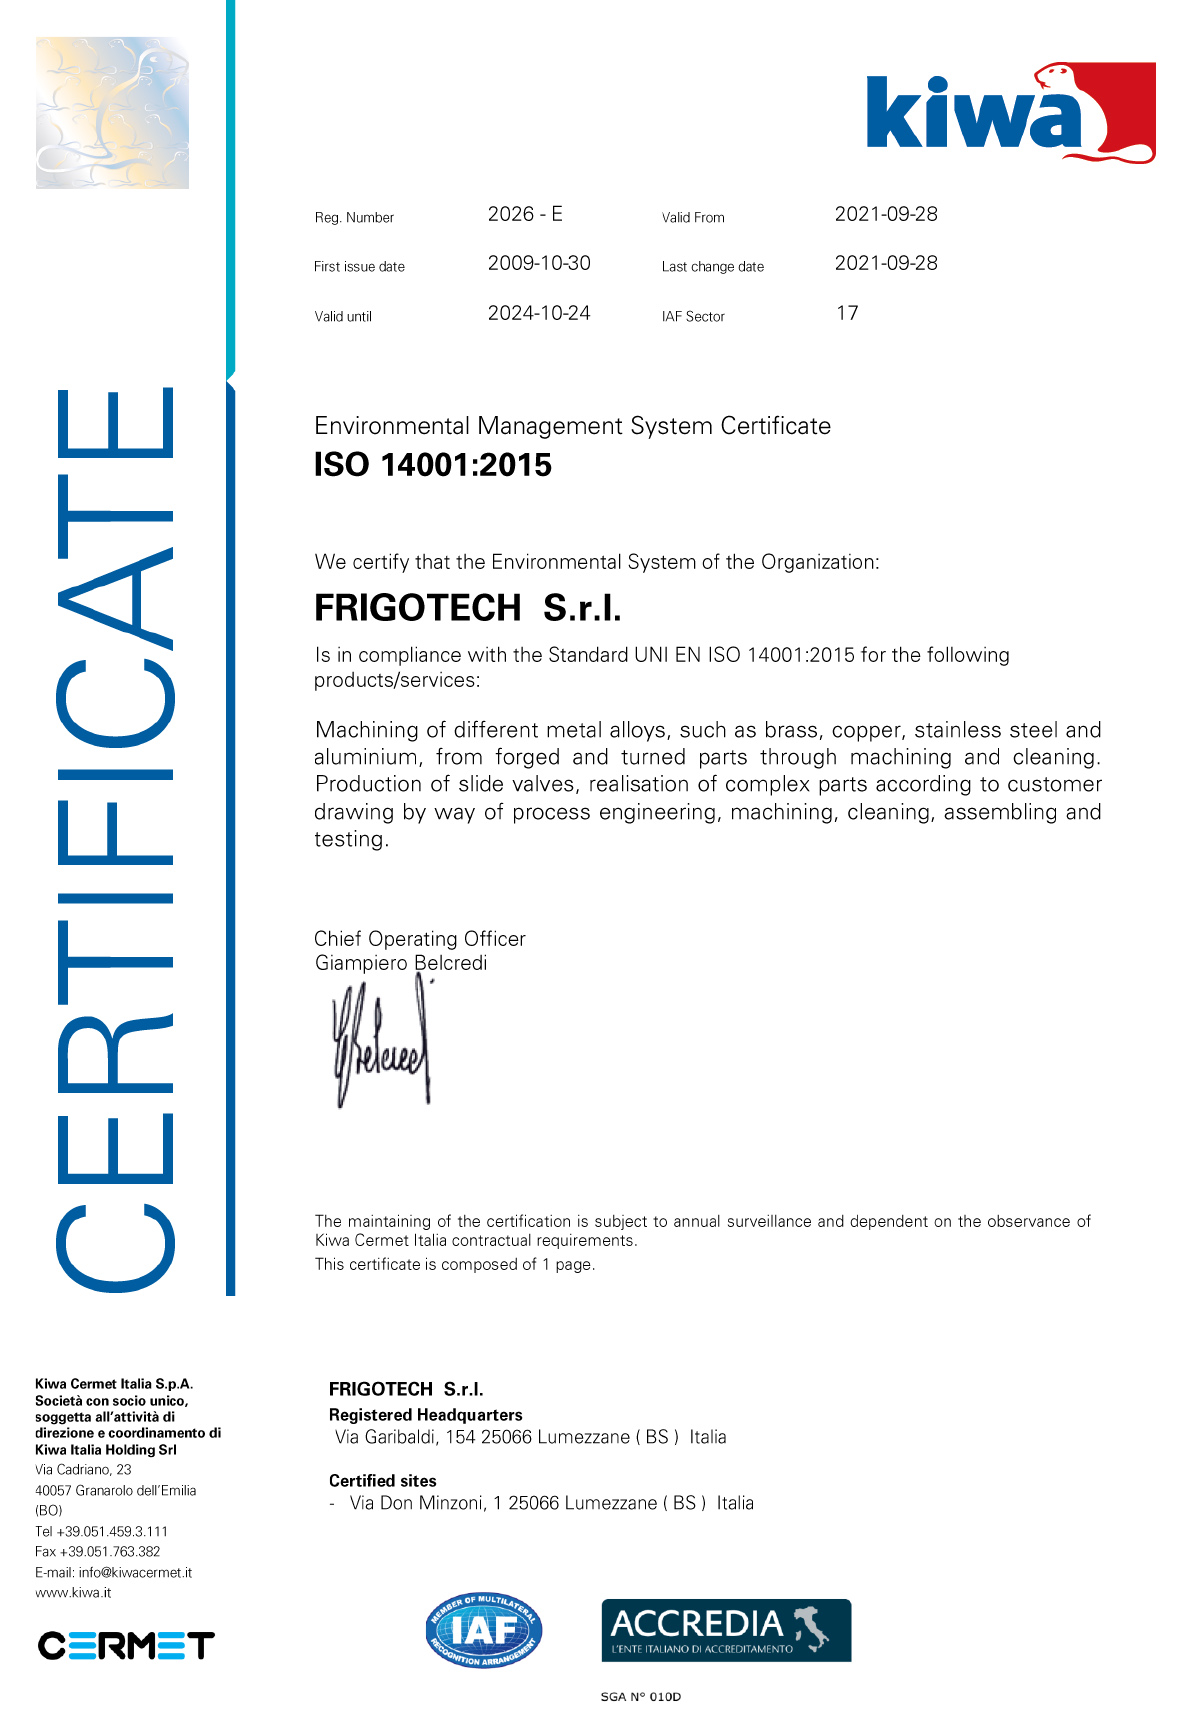 UNI EN ISO 14001:2004 environmental certification